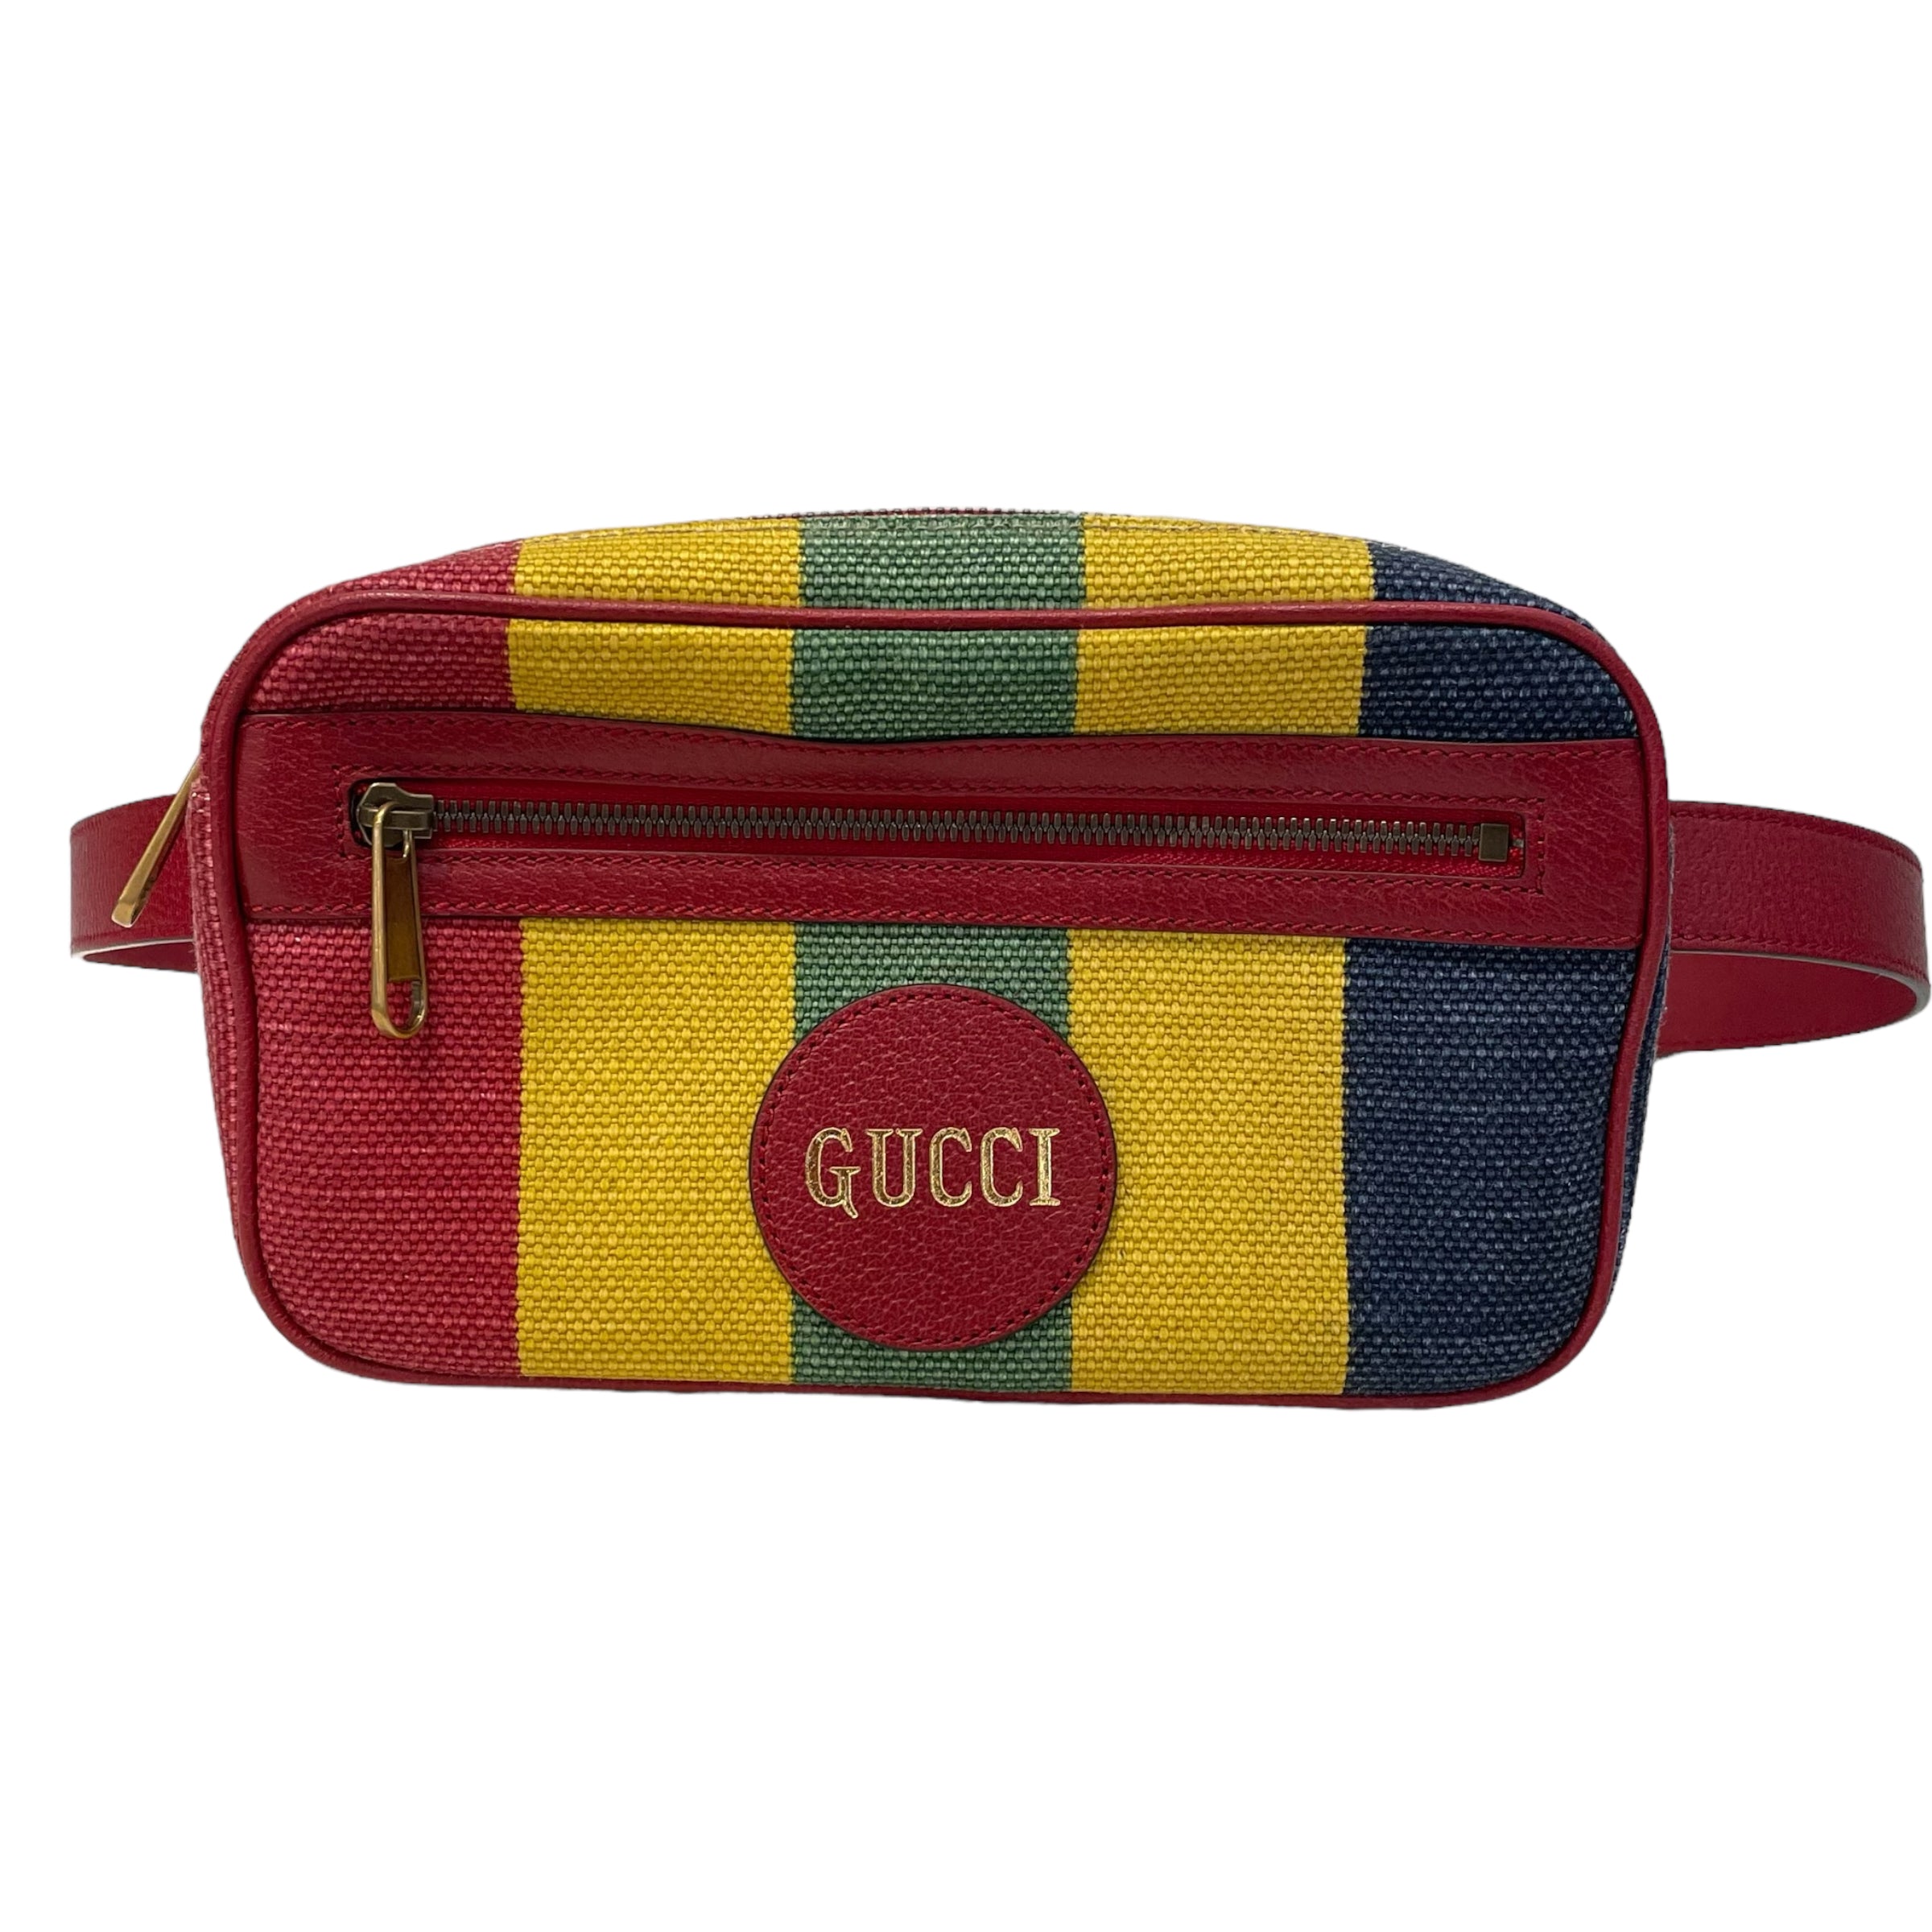 New Gucci Baiadero Striped Belt Bag Clutch Large